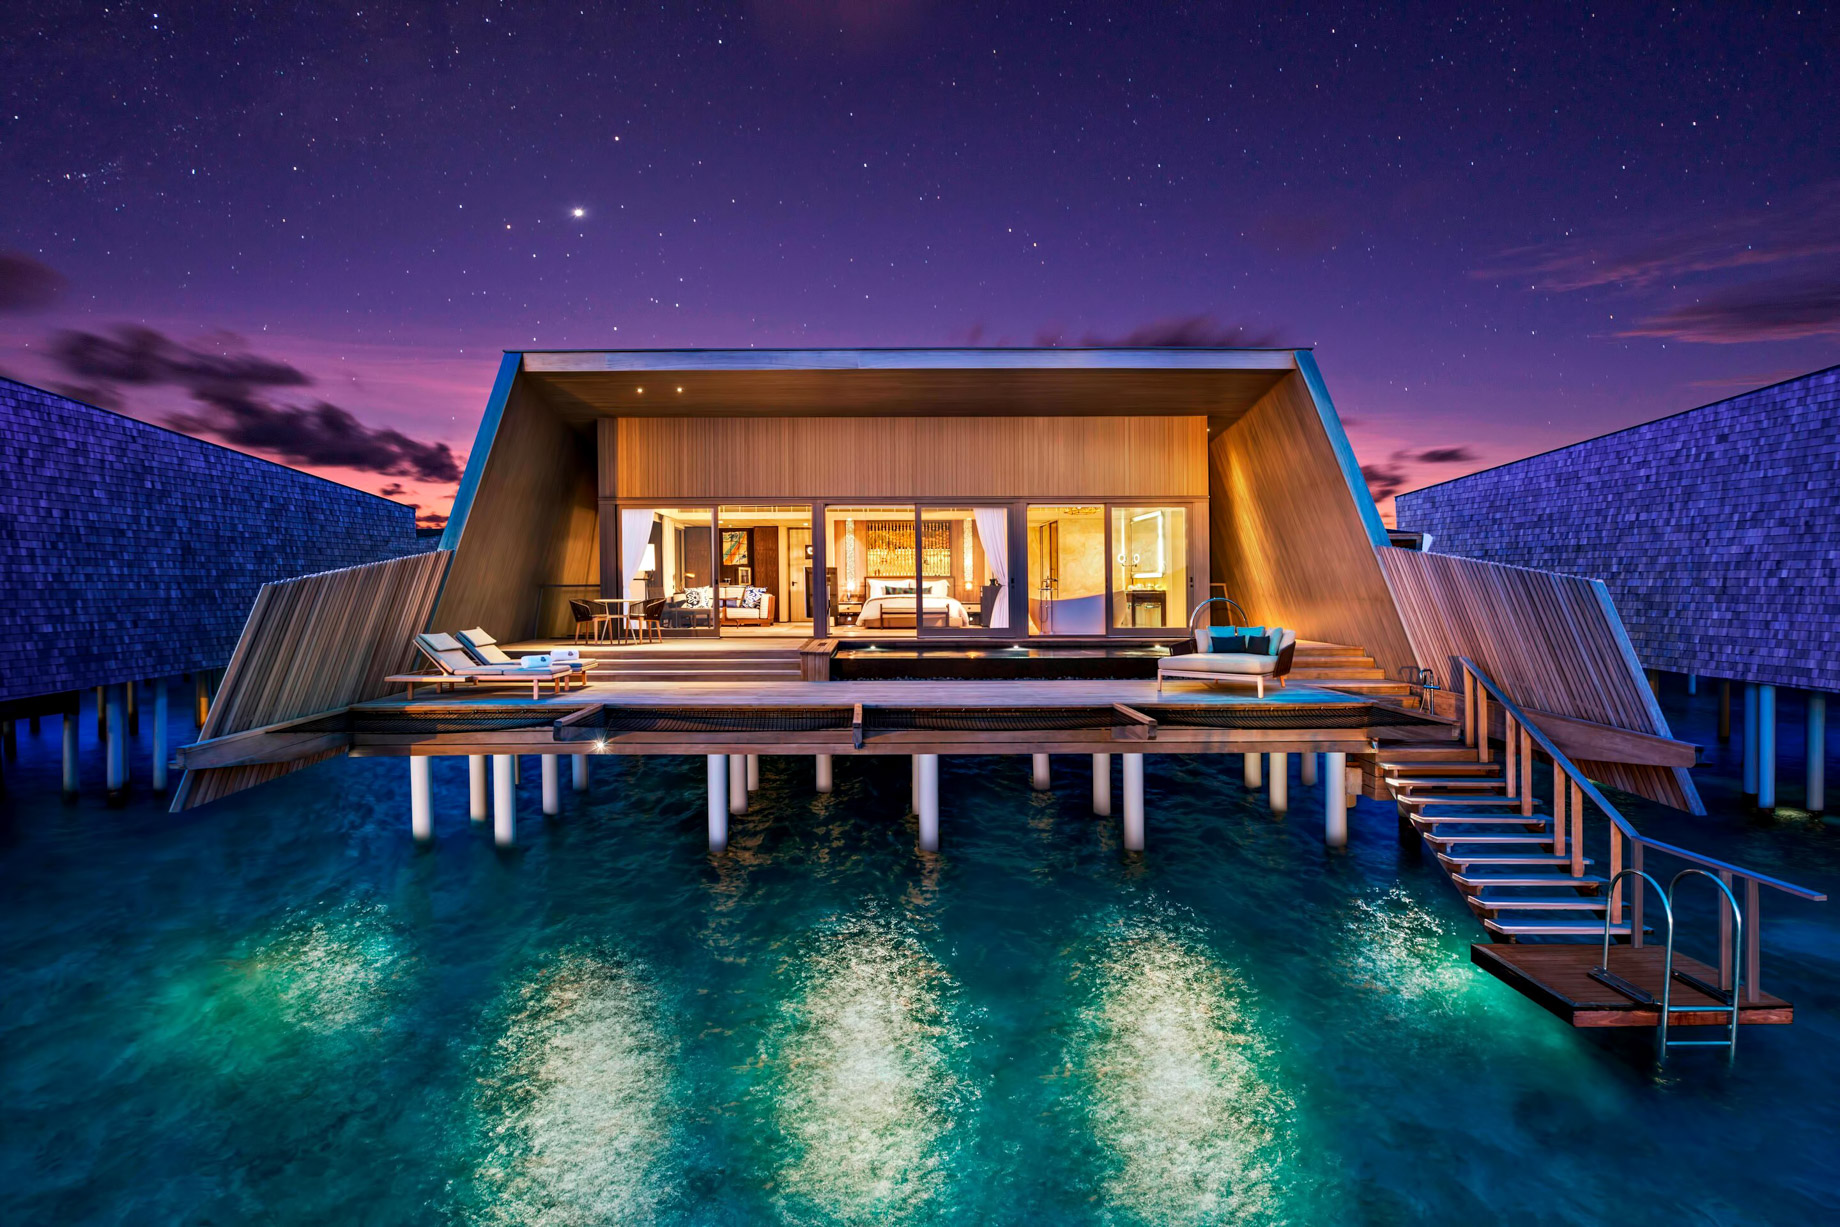 The St. Regis Maldives Vommuli Resort – Dhaalu Atoll, Maldives – Sunset Overwater Villa Night